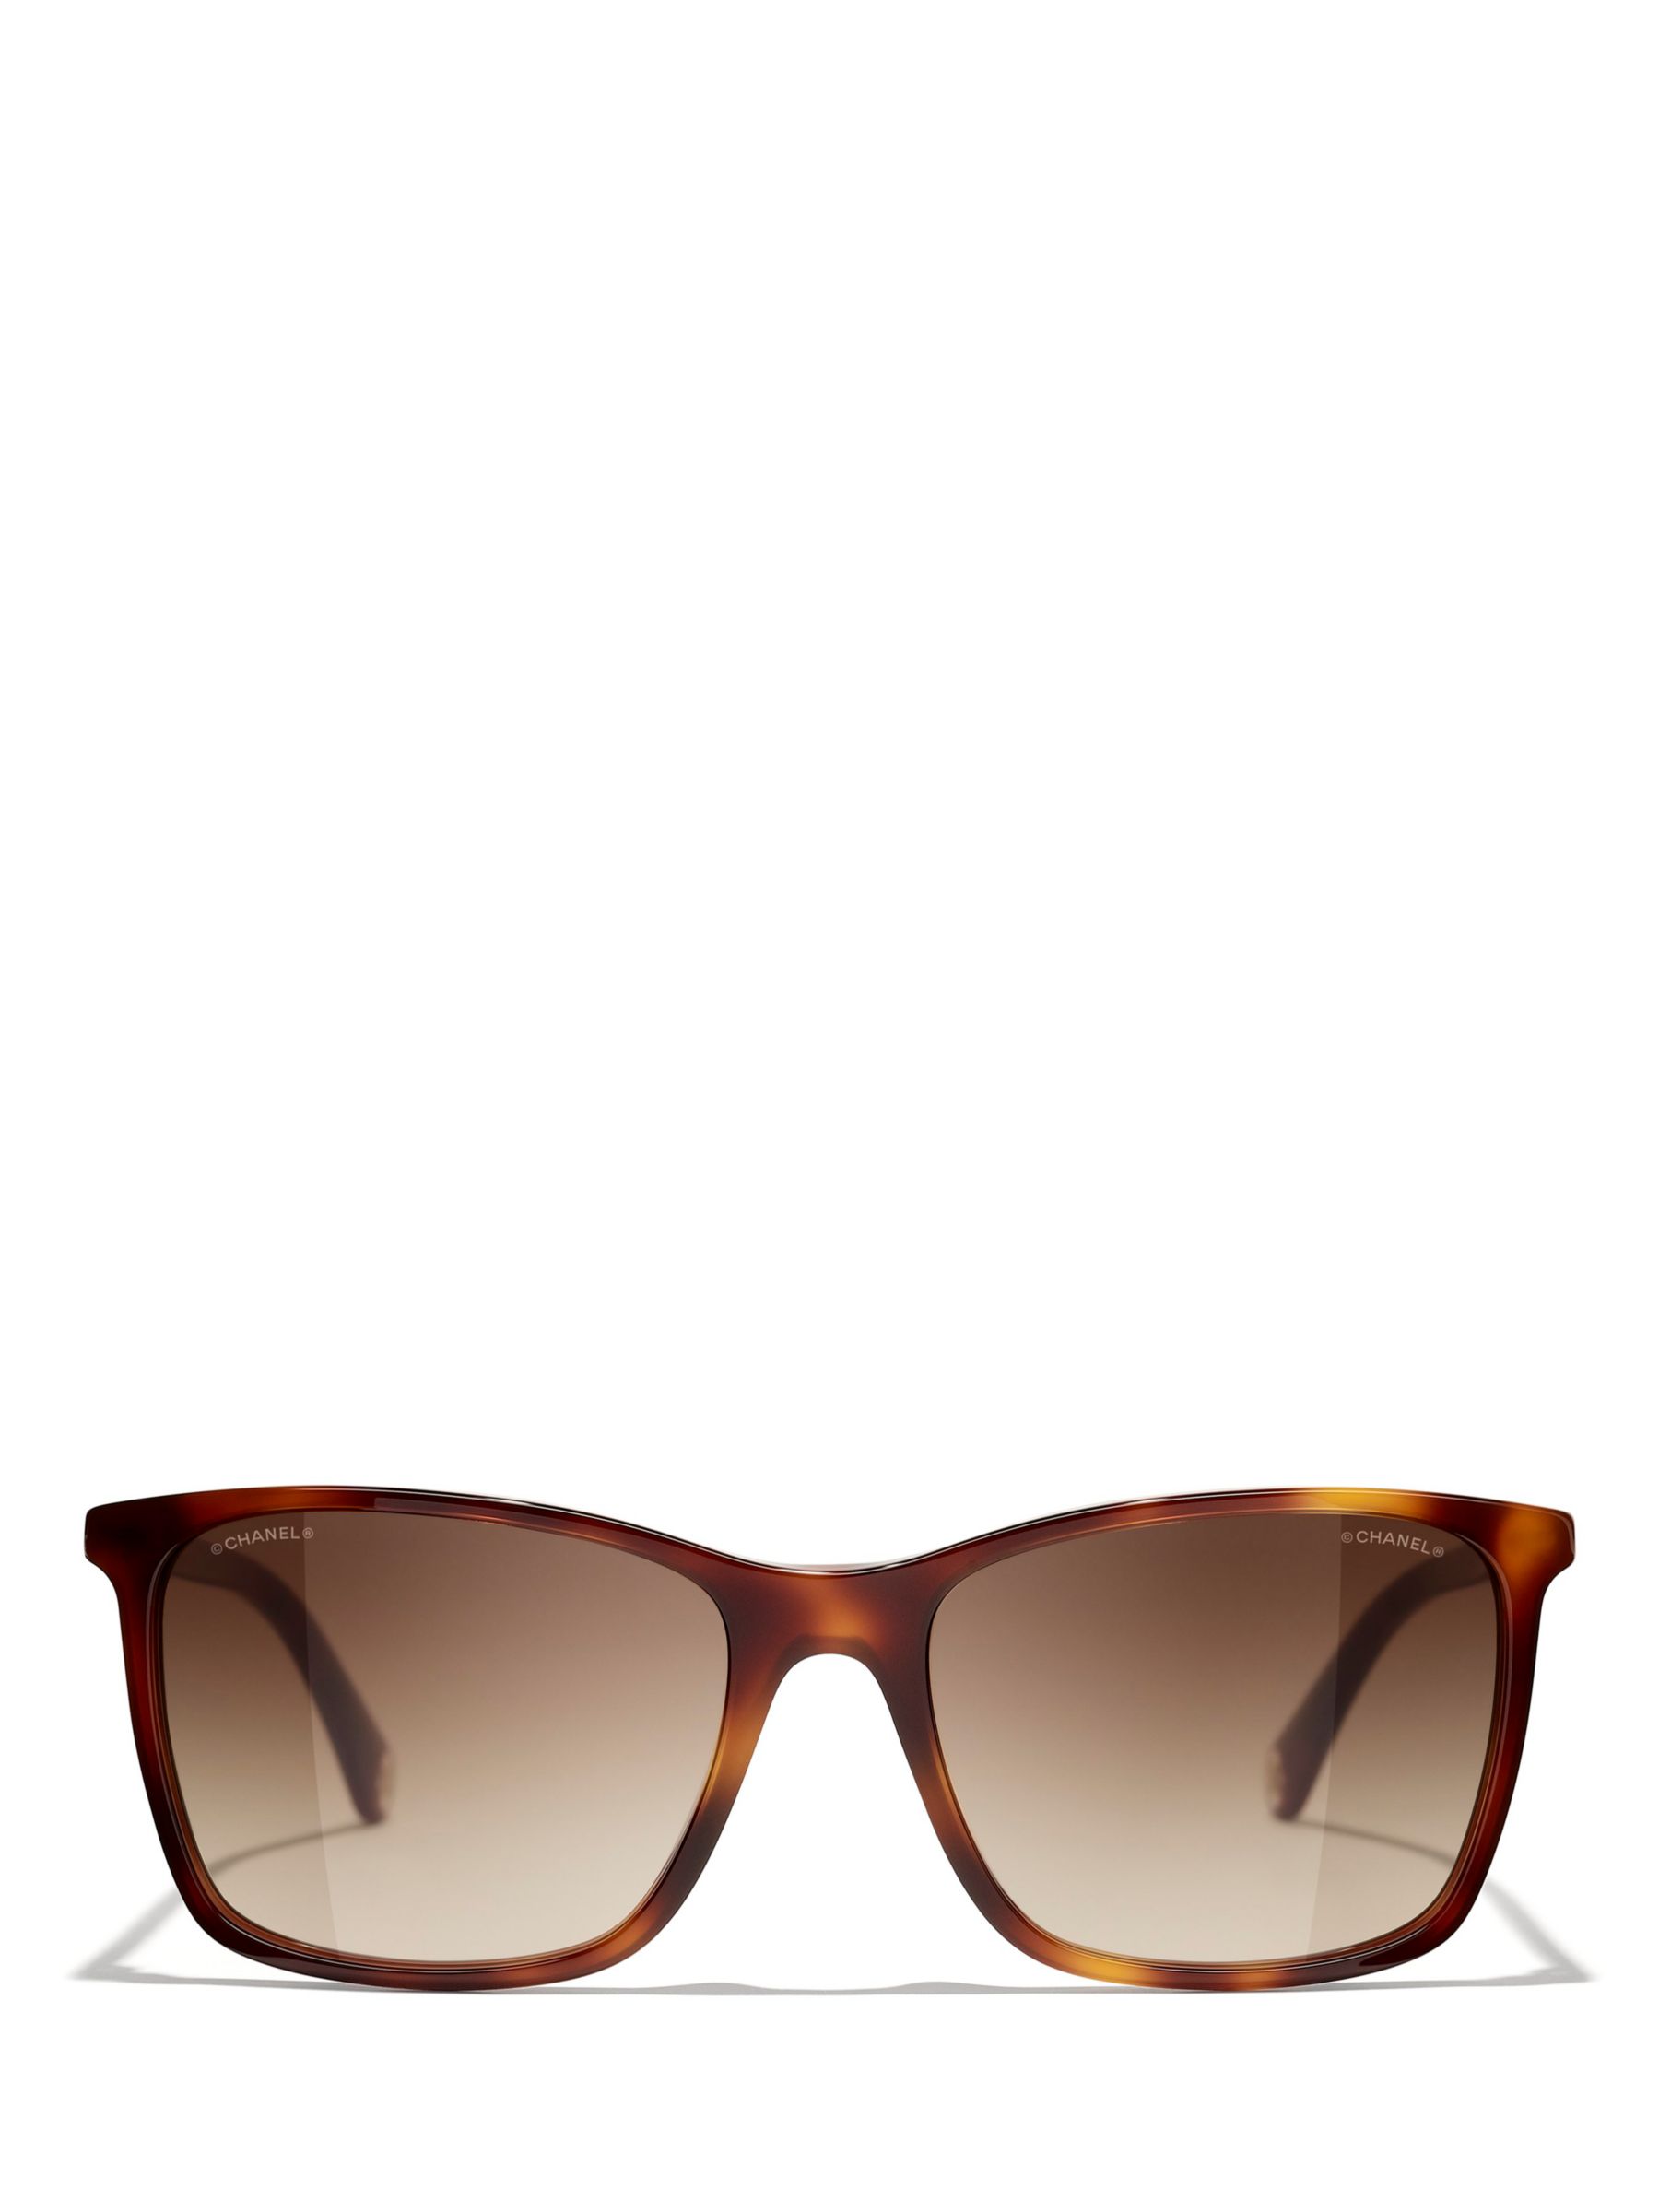 CHANEL Men's Sunglasses | John Lewis & Partners